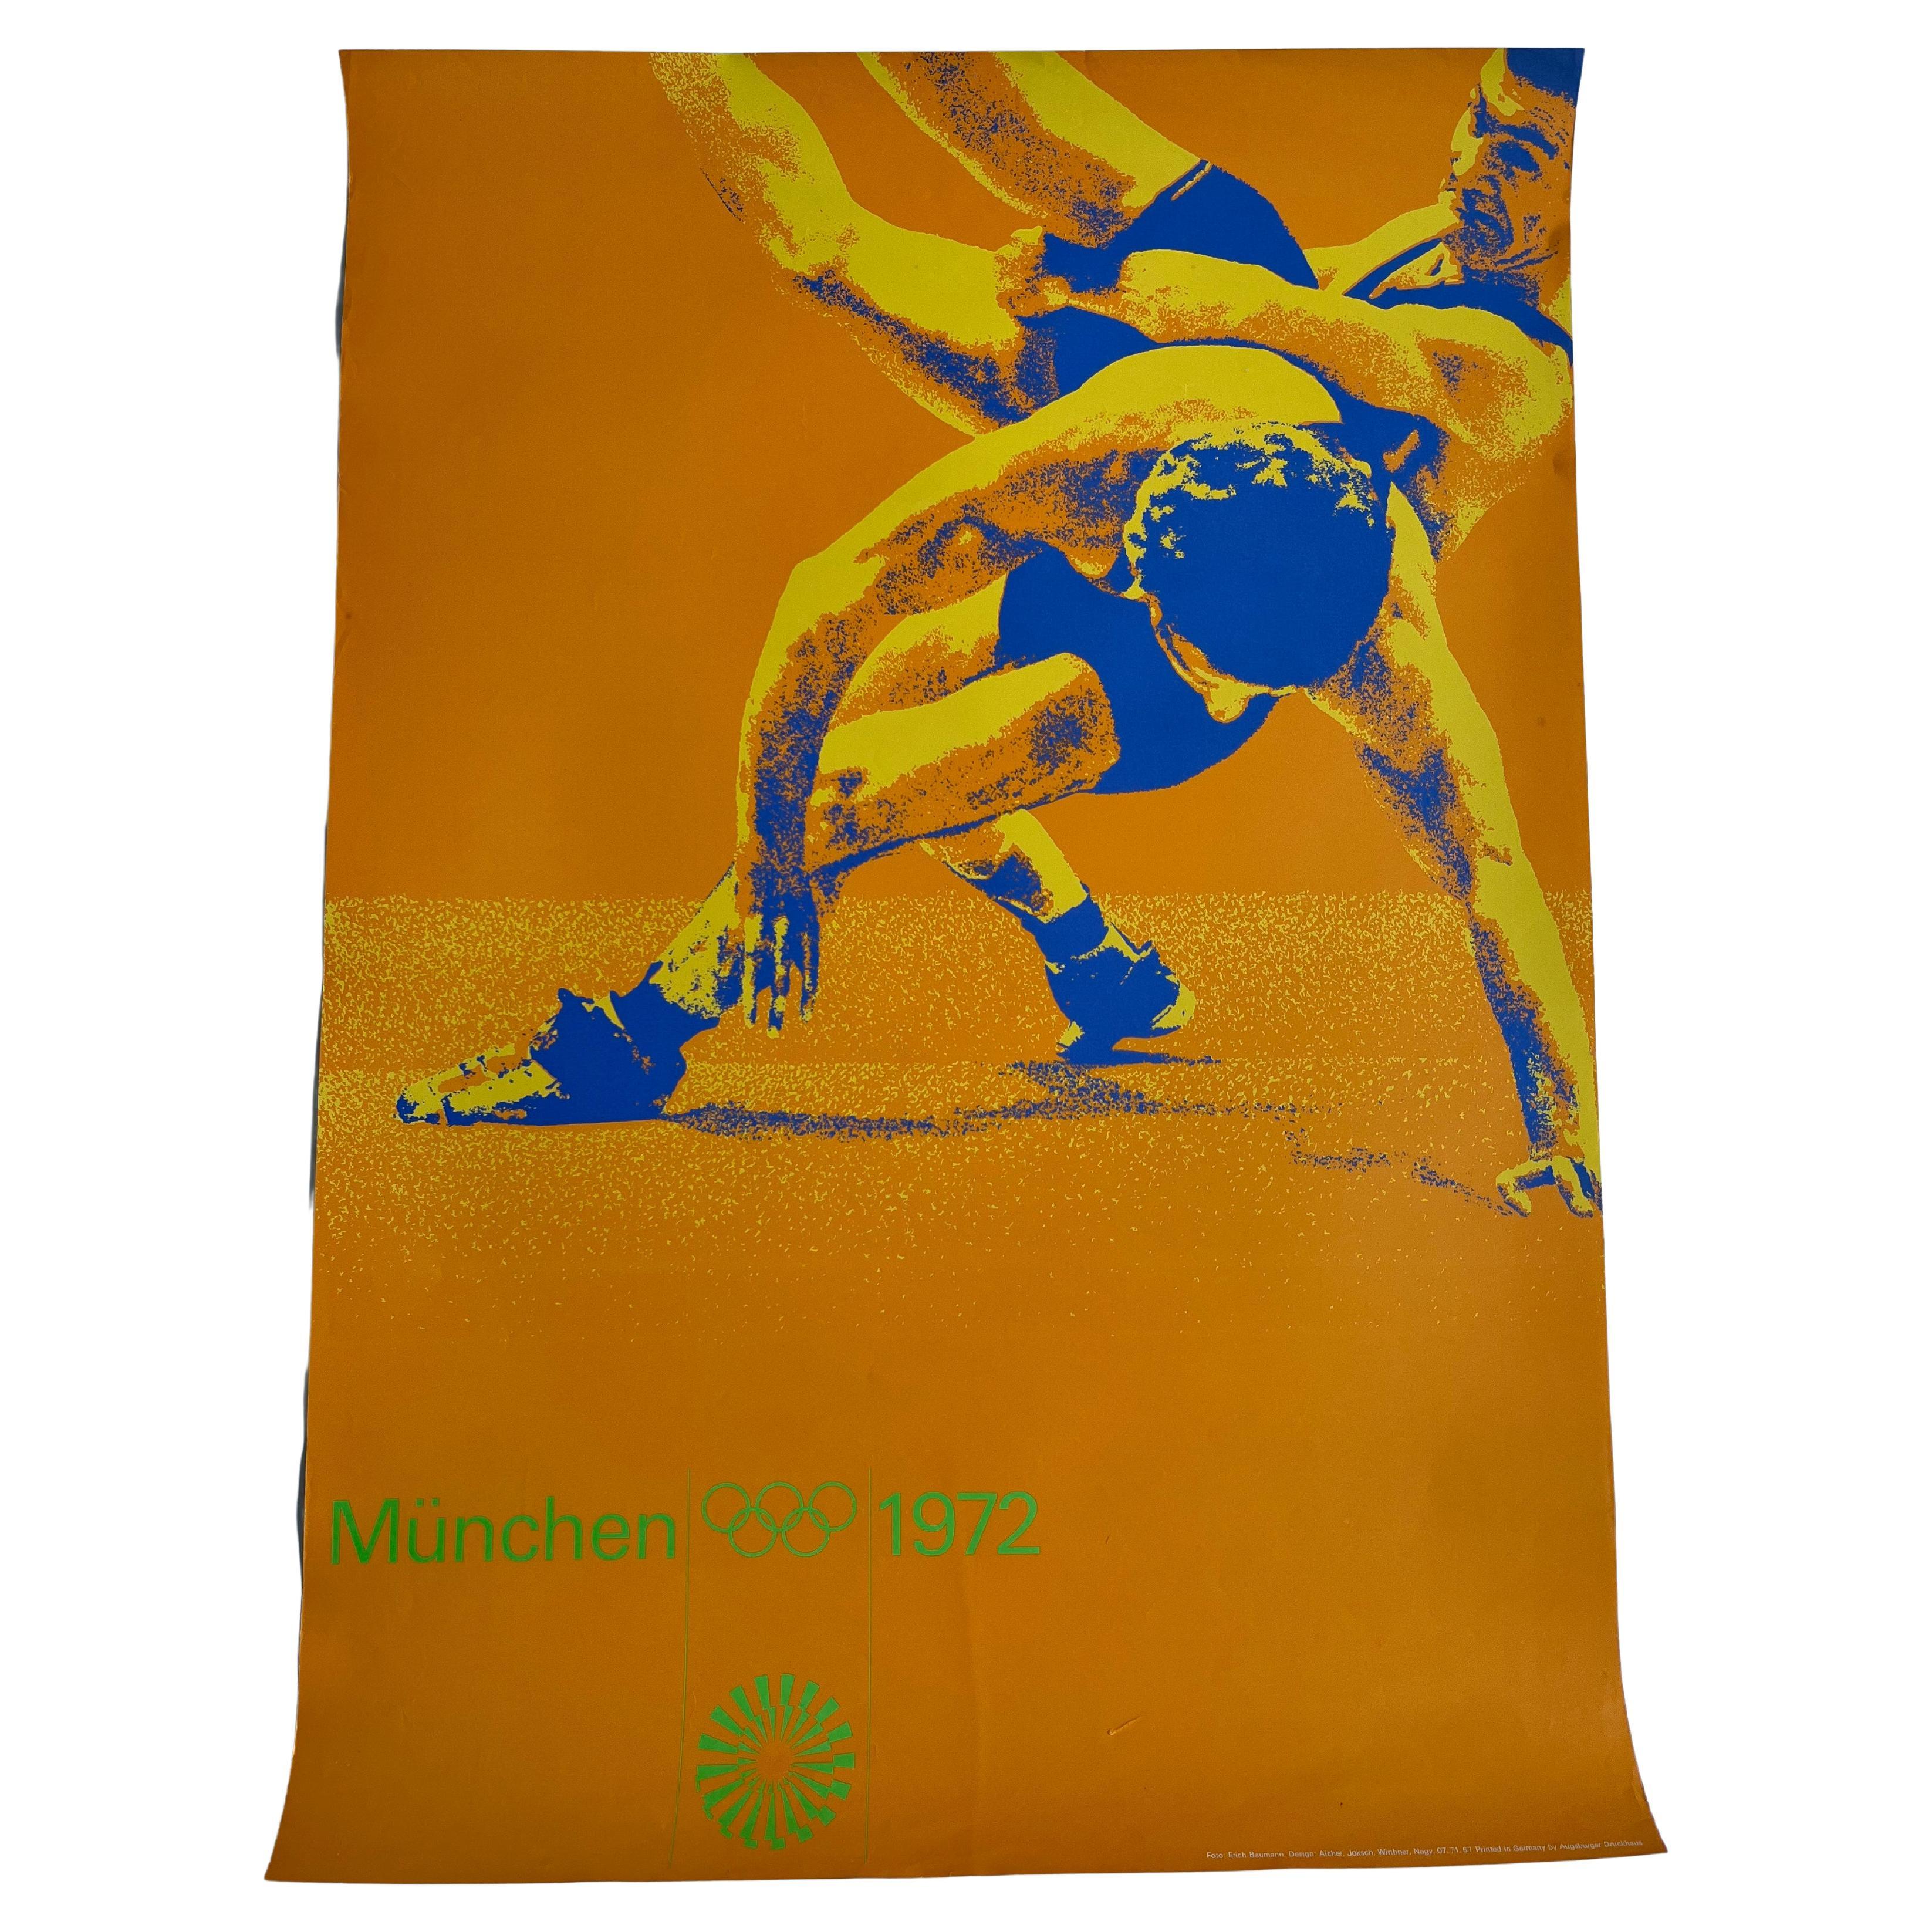 Otl Aicher "Olympic Games Munich 1972, Men's Wrestling, Original Poster